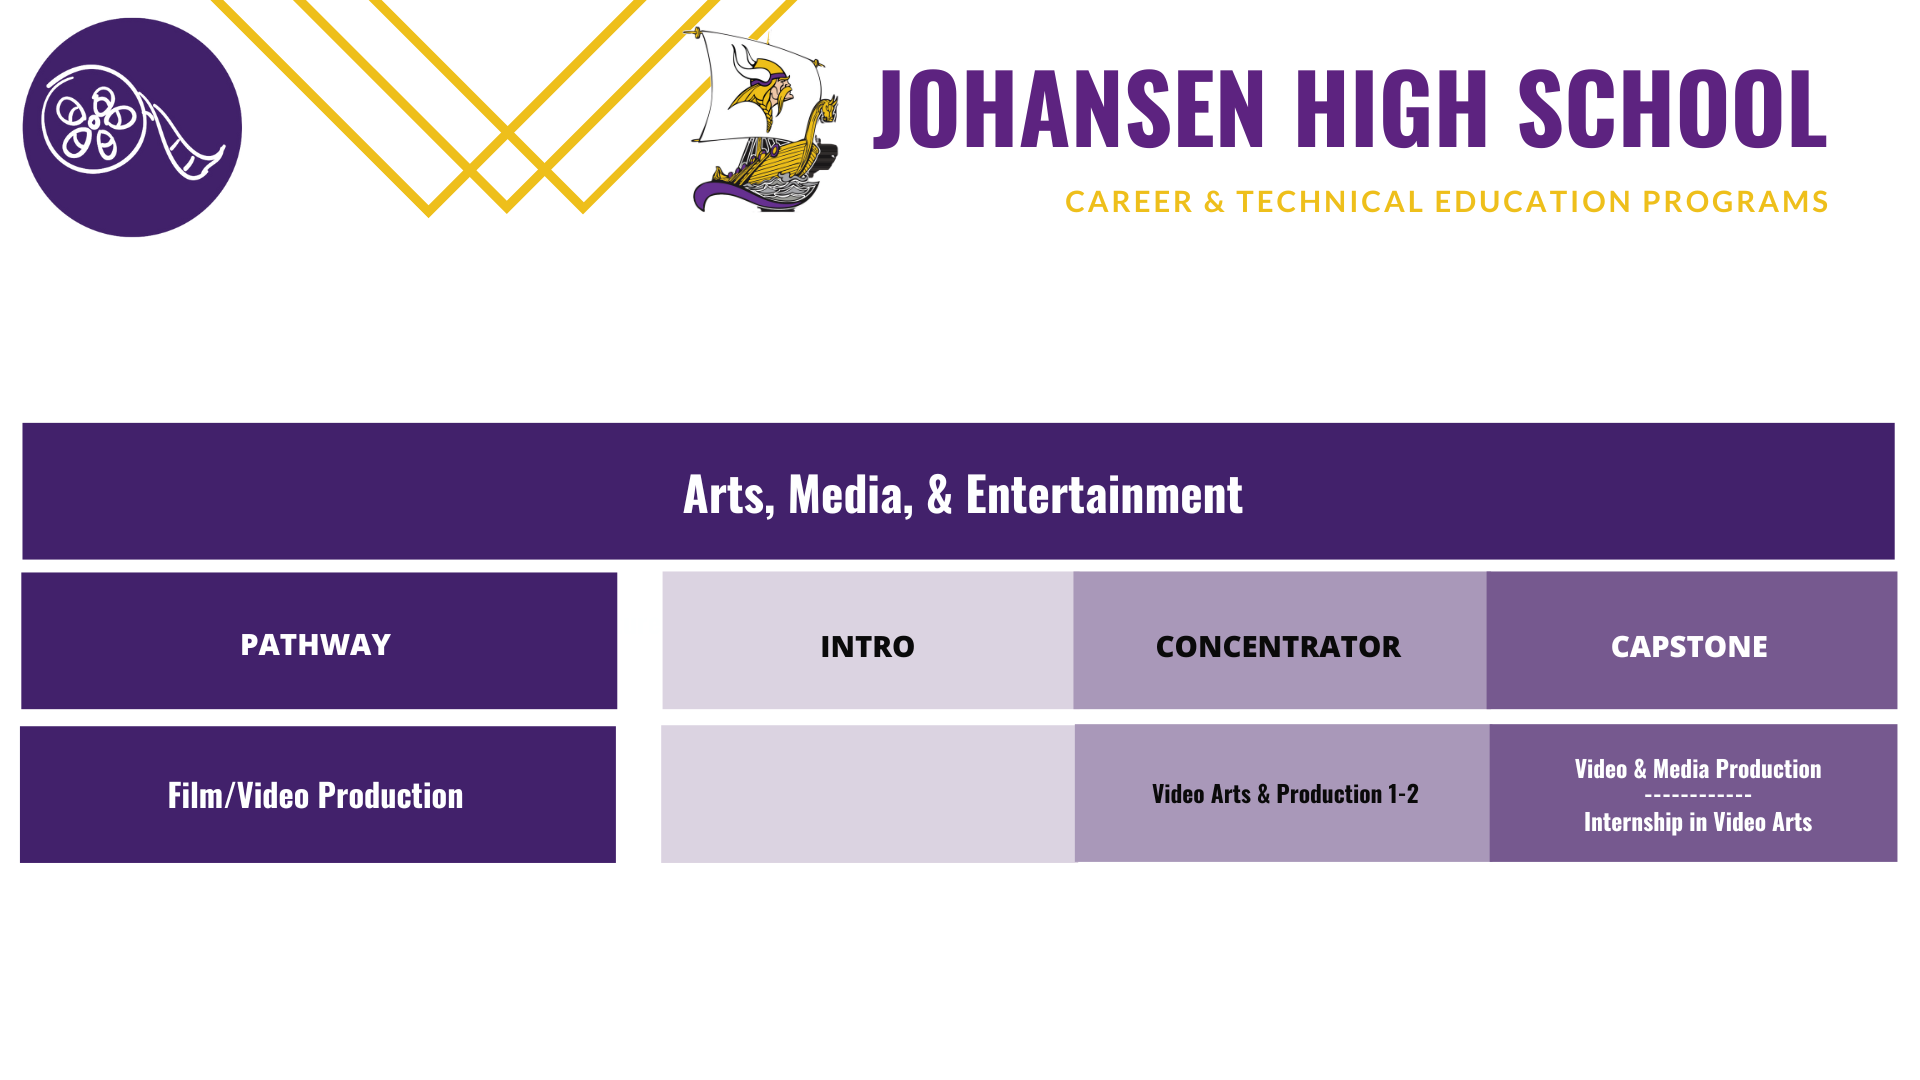 Johansen-video-production-pathway